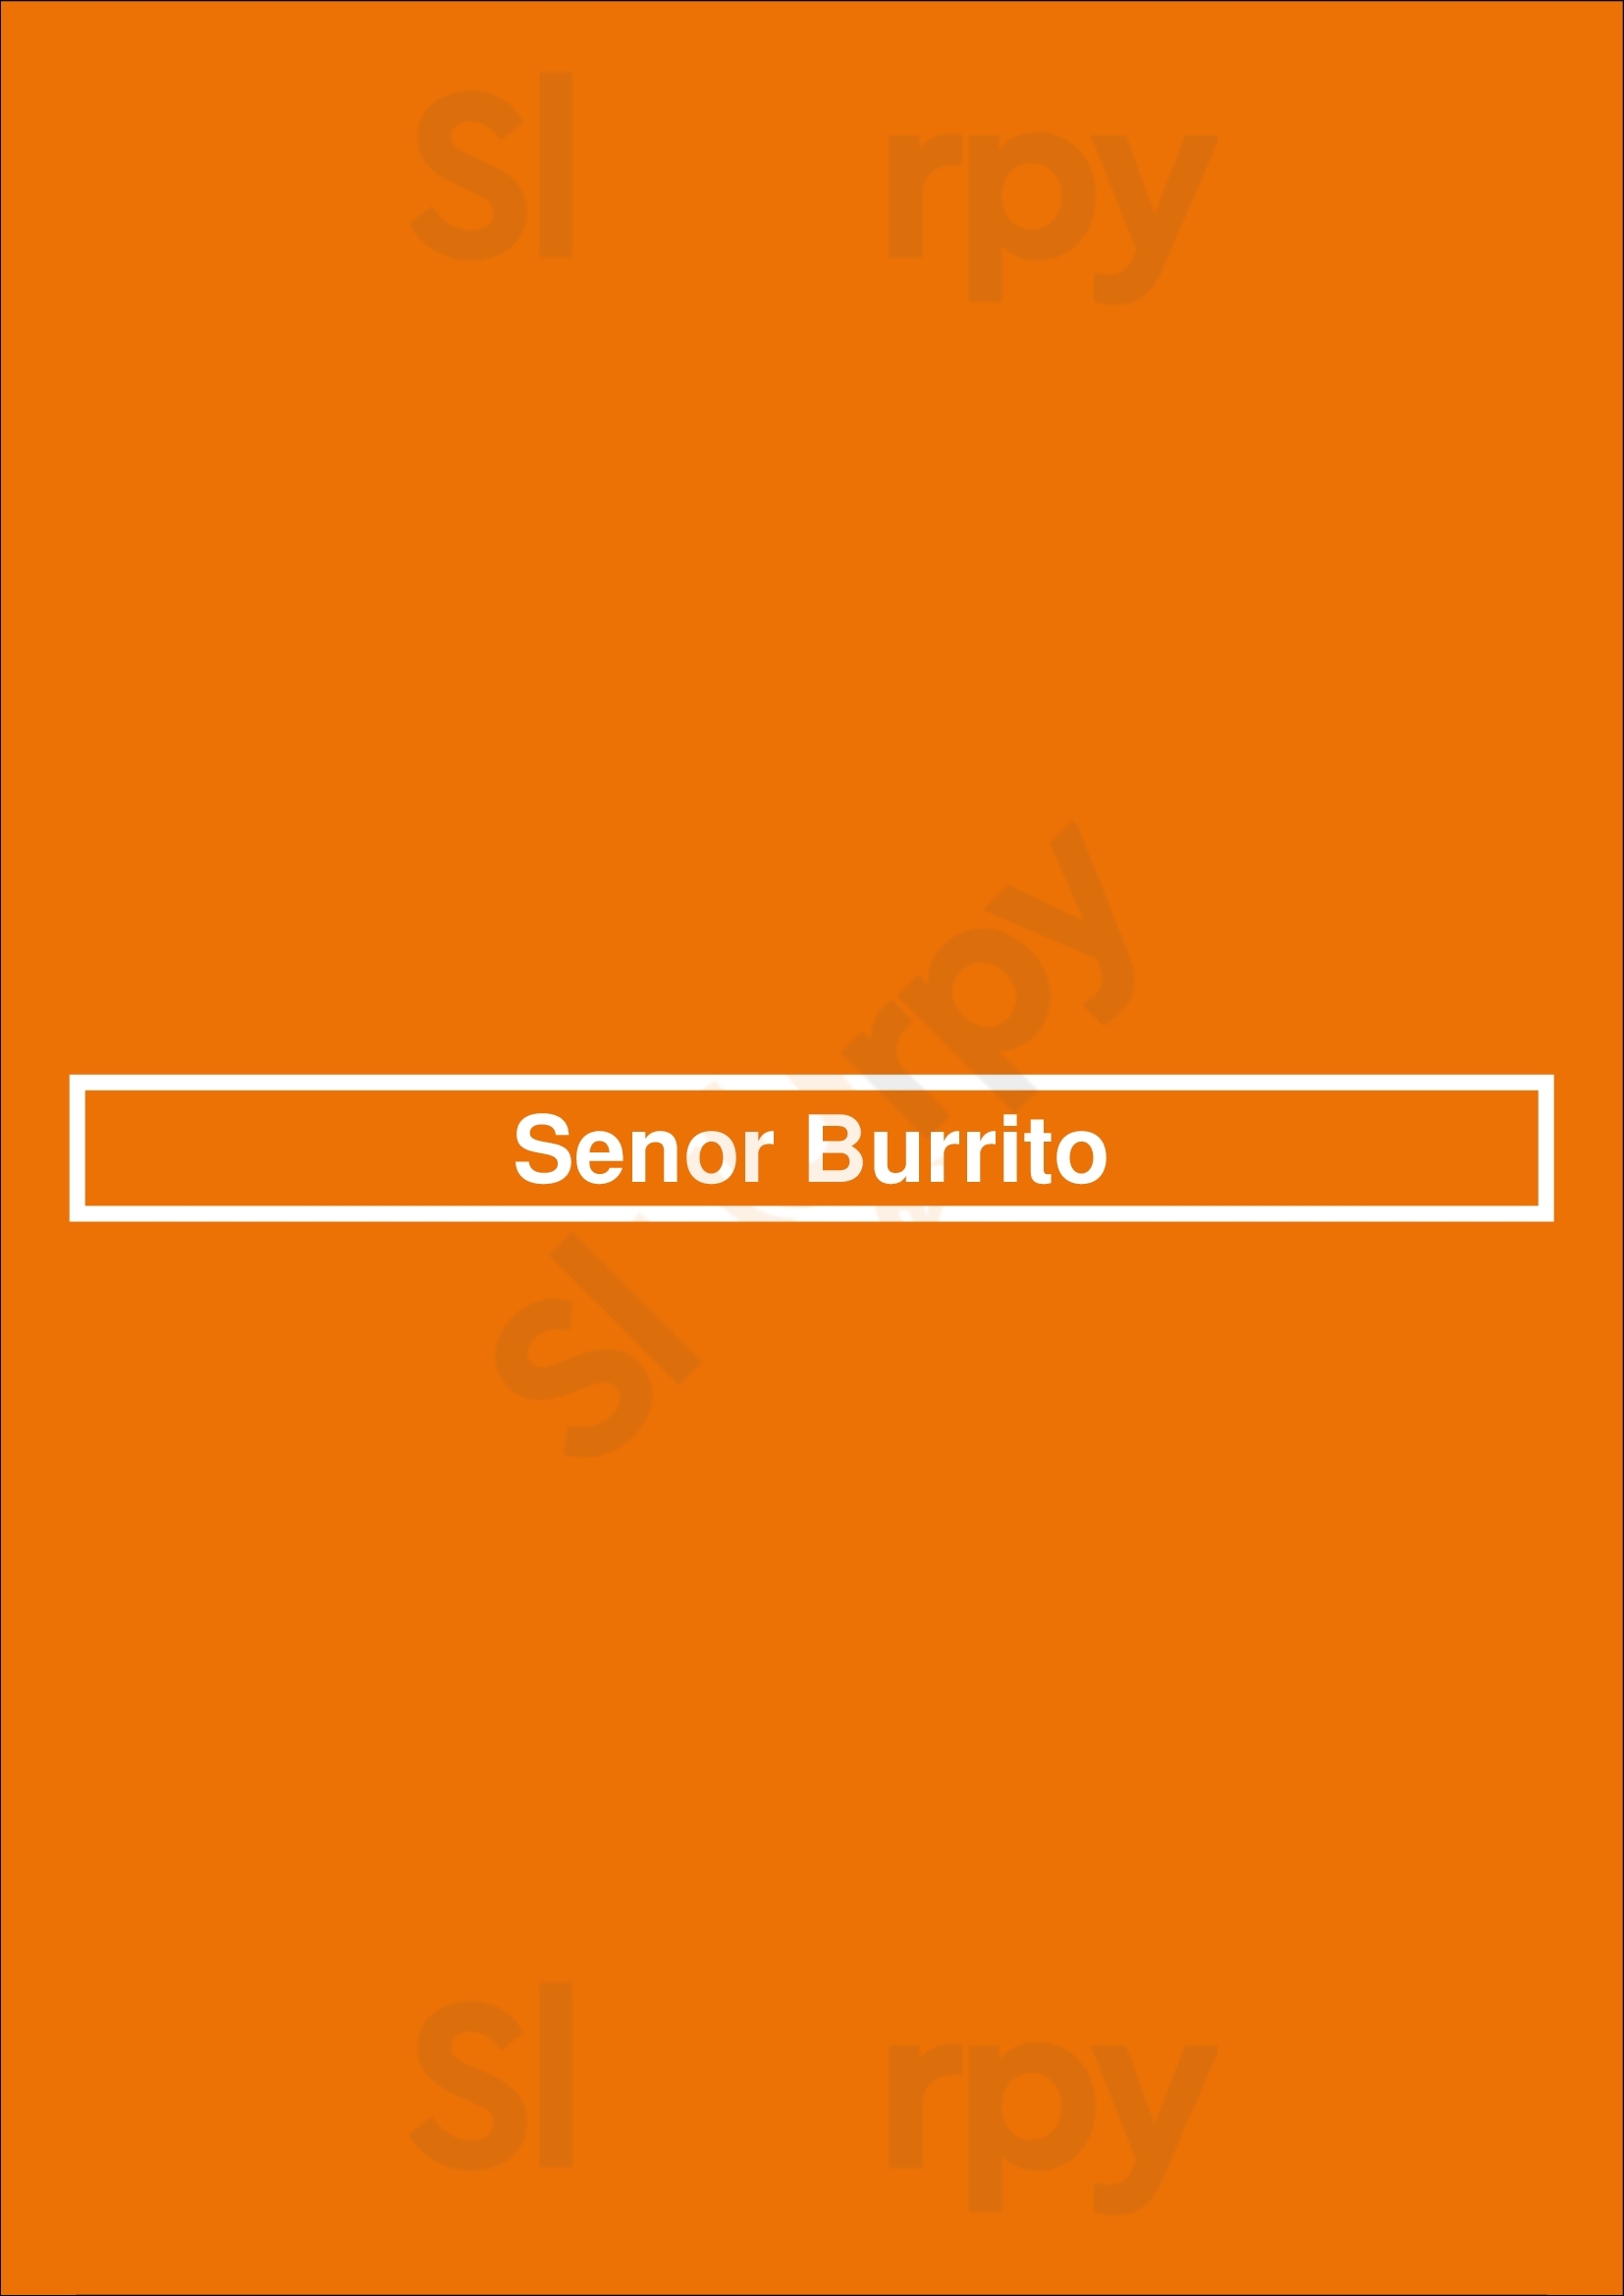 Senor Burrito Mississauga Menu - 1